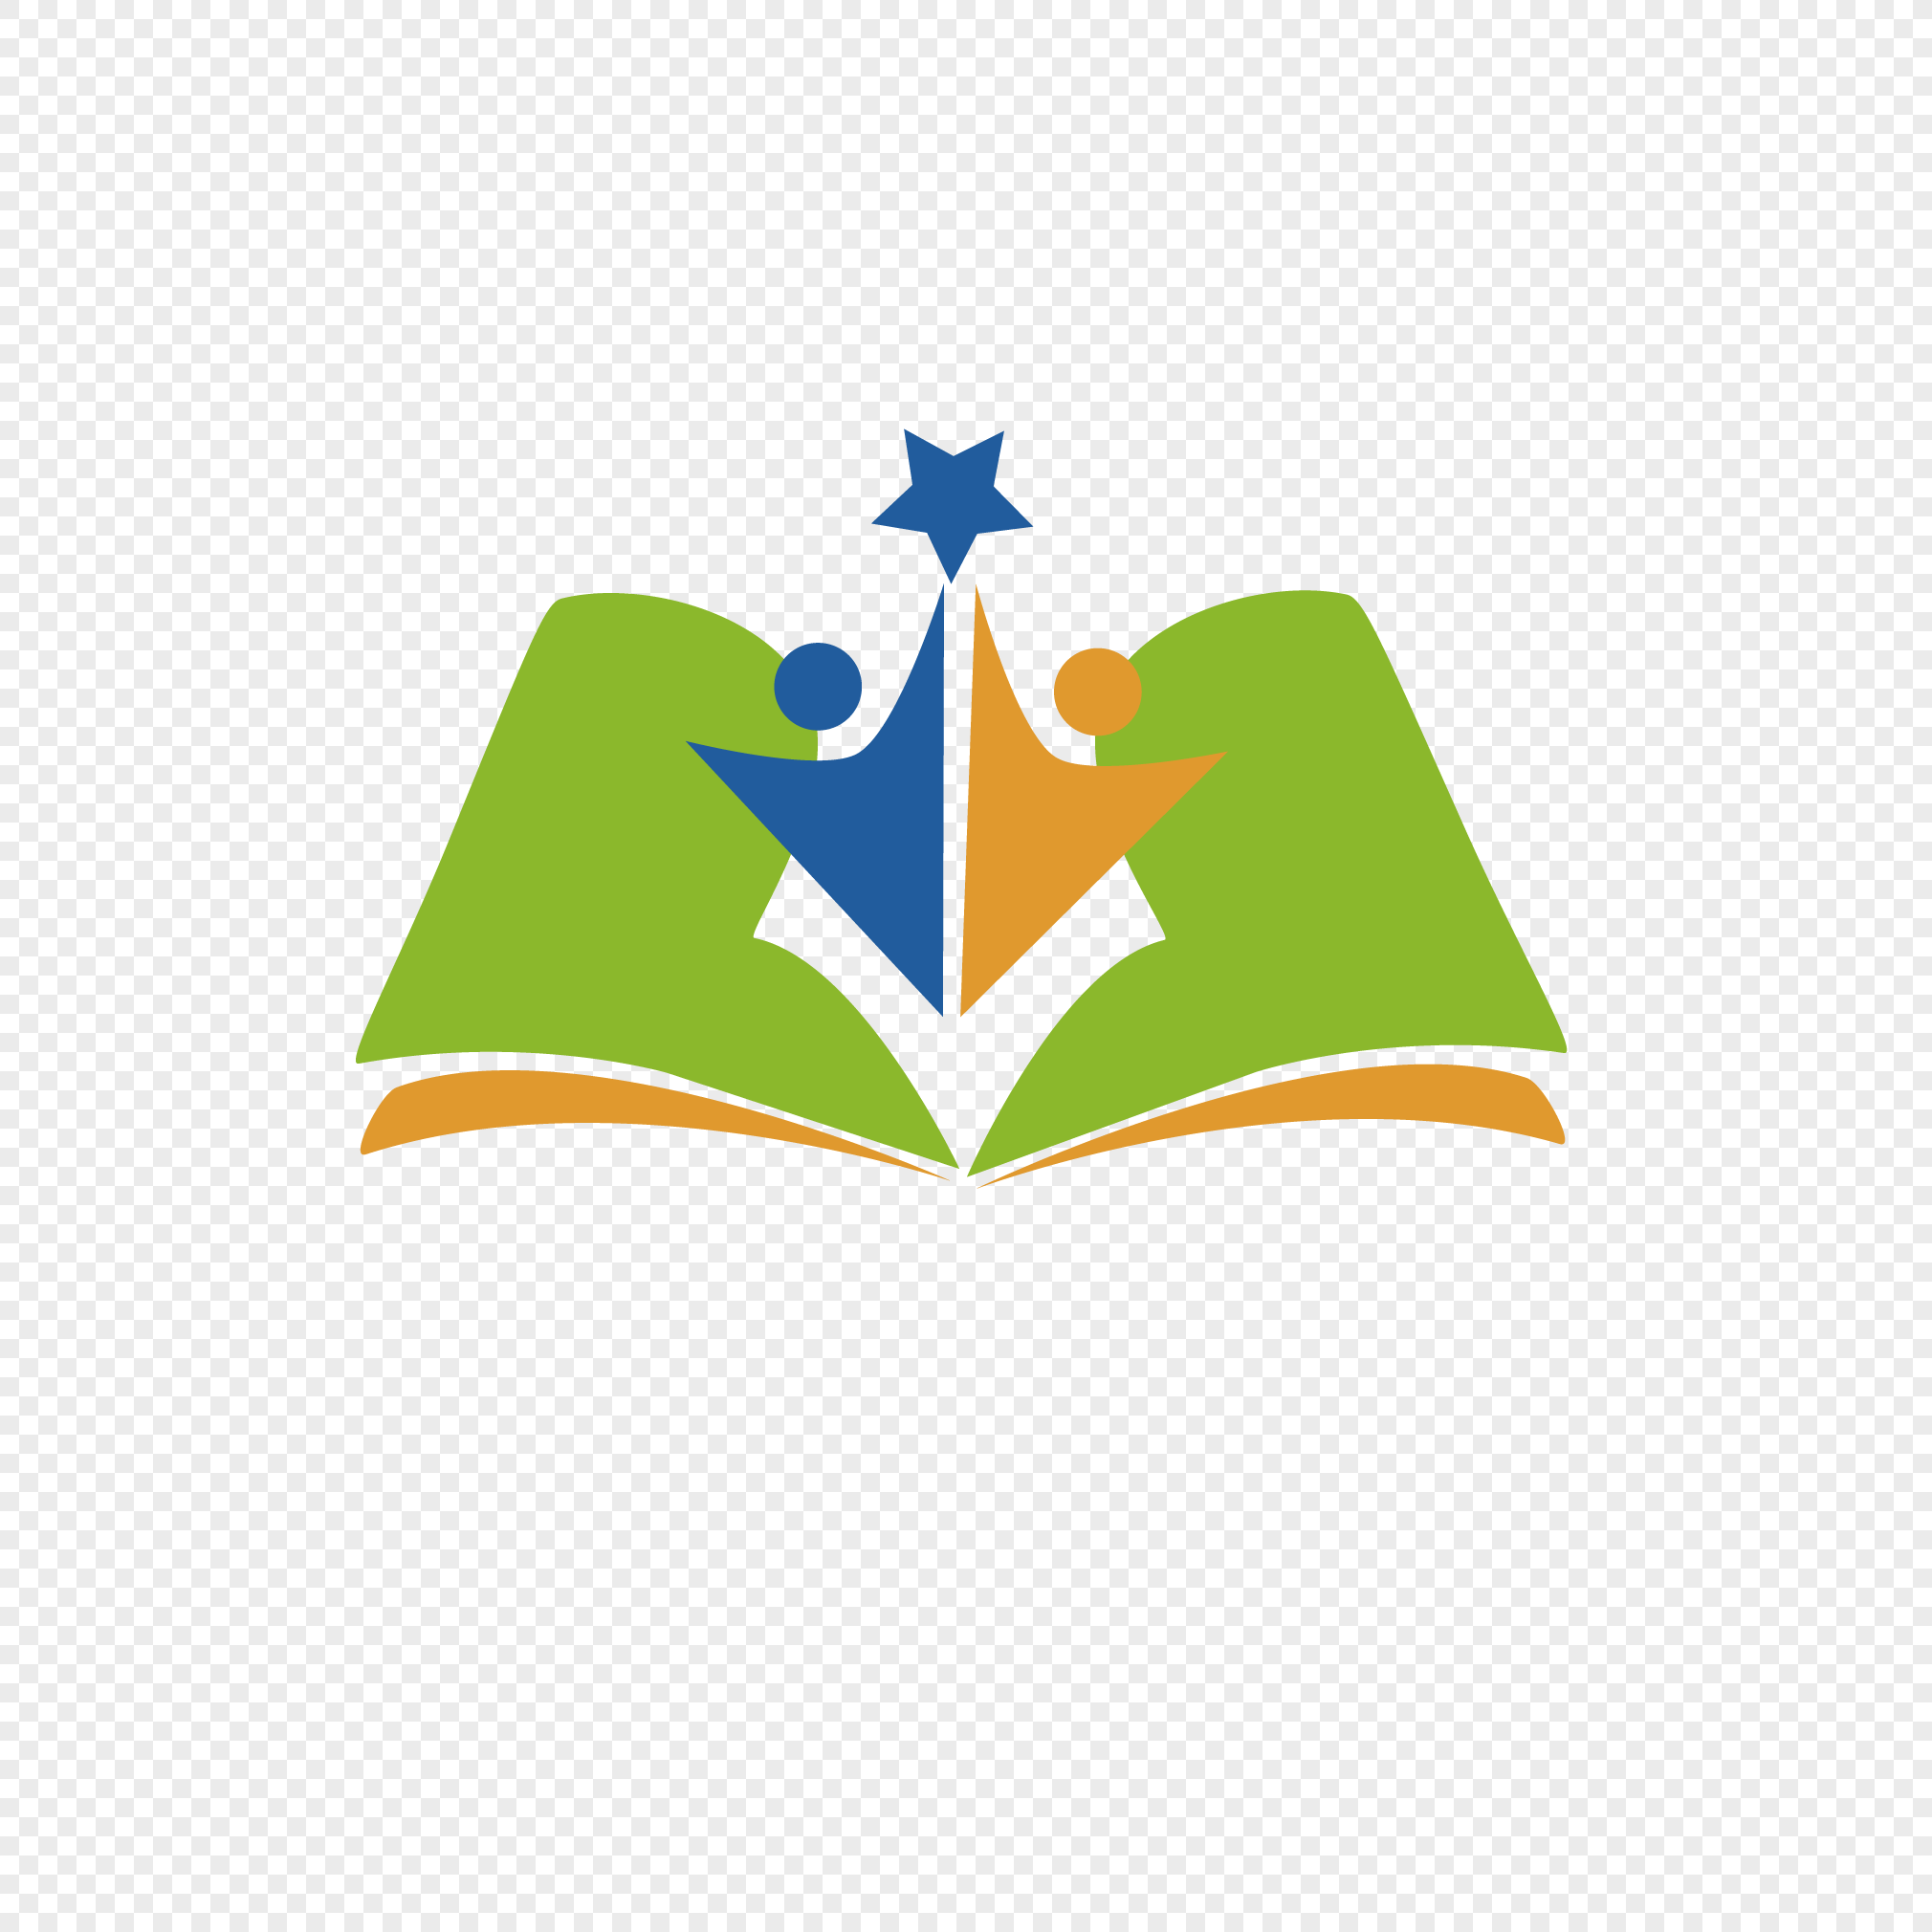 Education logo, logo, book icons, icon png white transparent